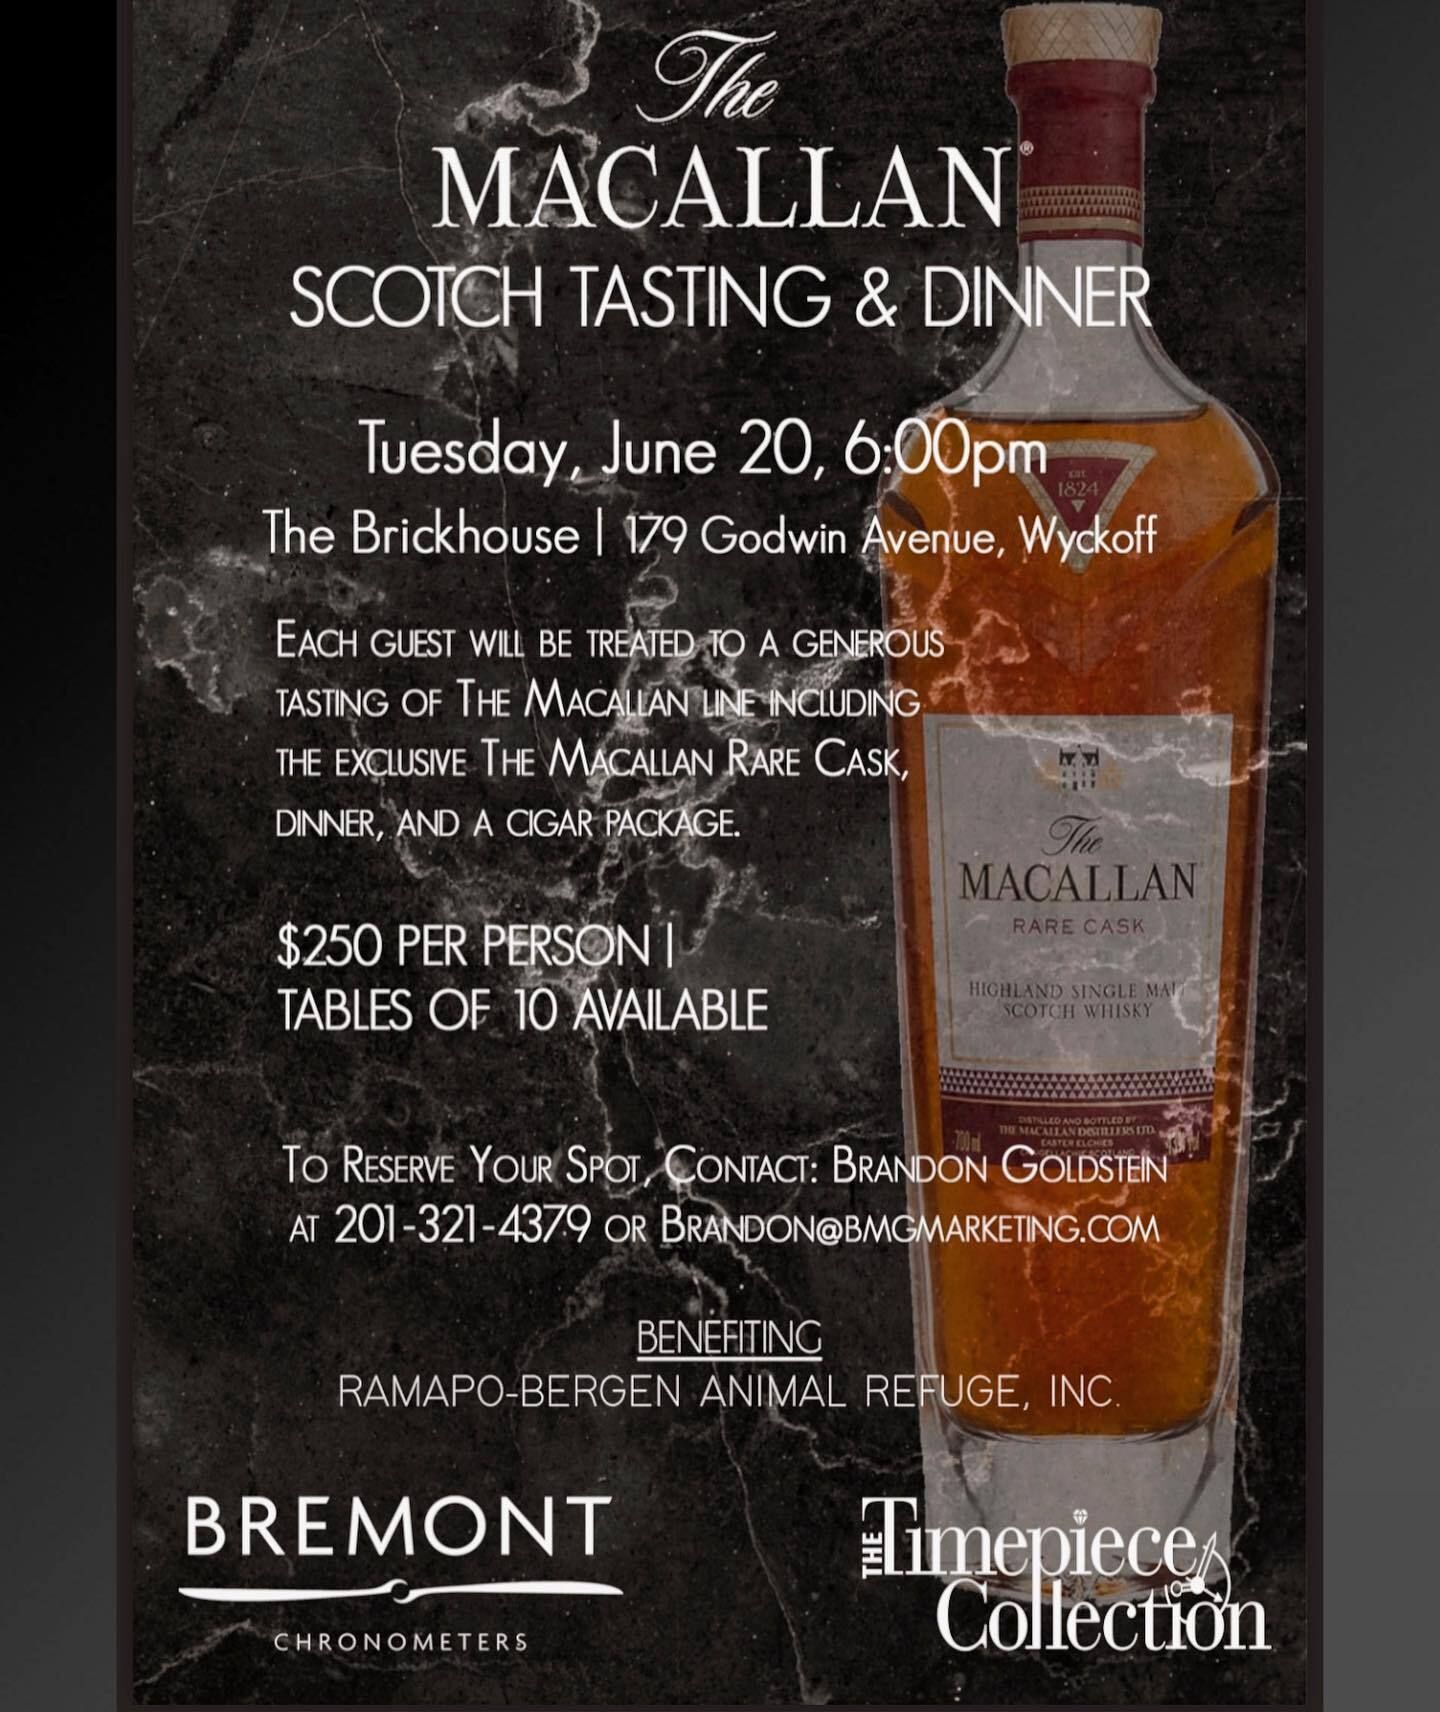 The Macallan Scotch Tasting & Dinner